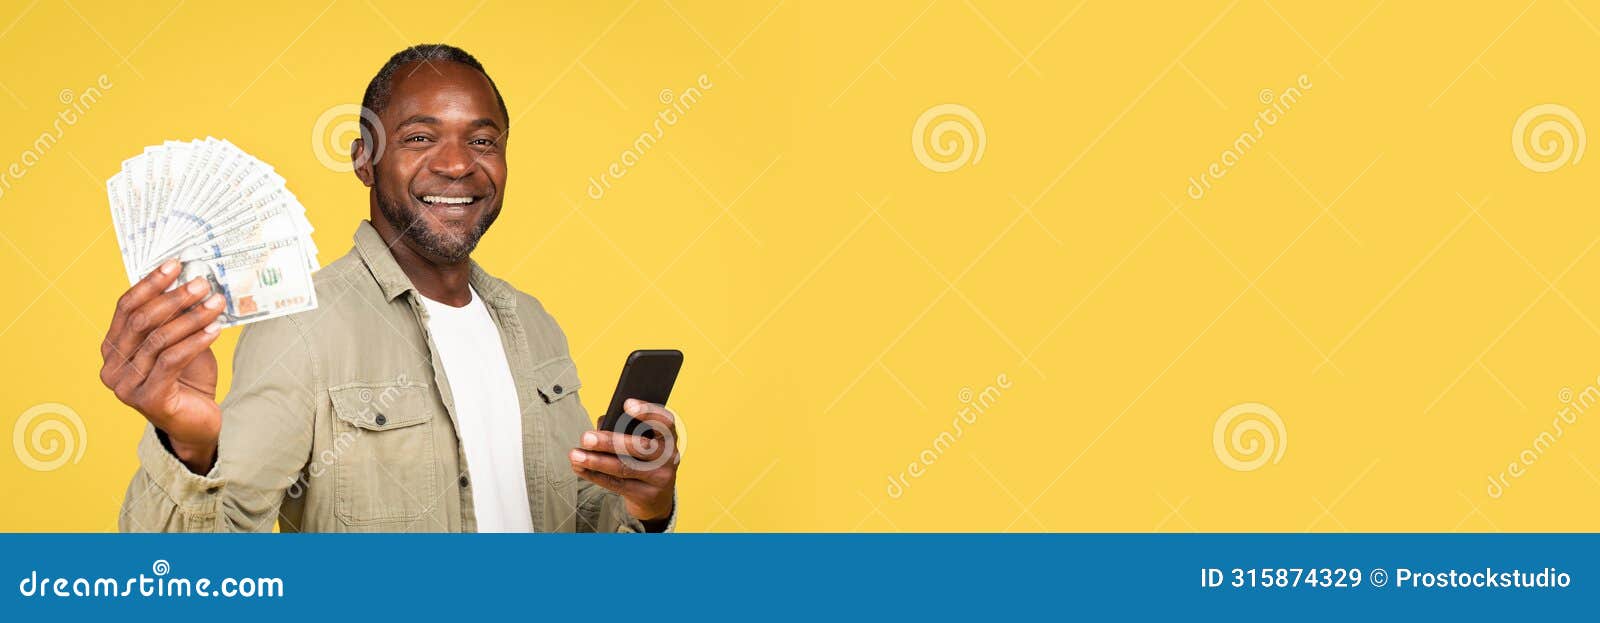 glad mature black guy showing many dollars cash, using smartphone